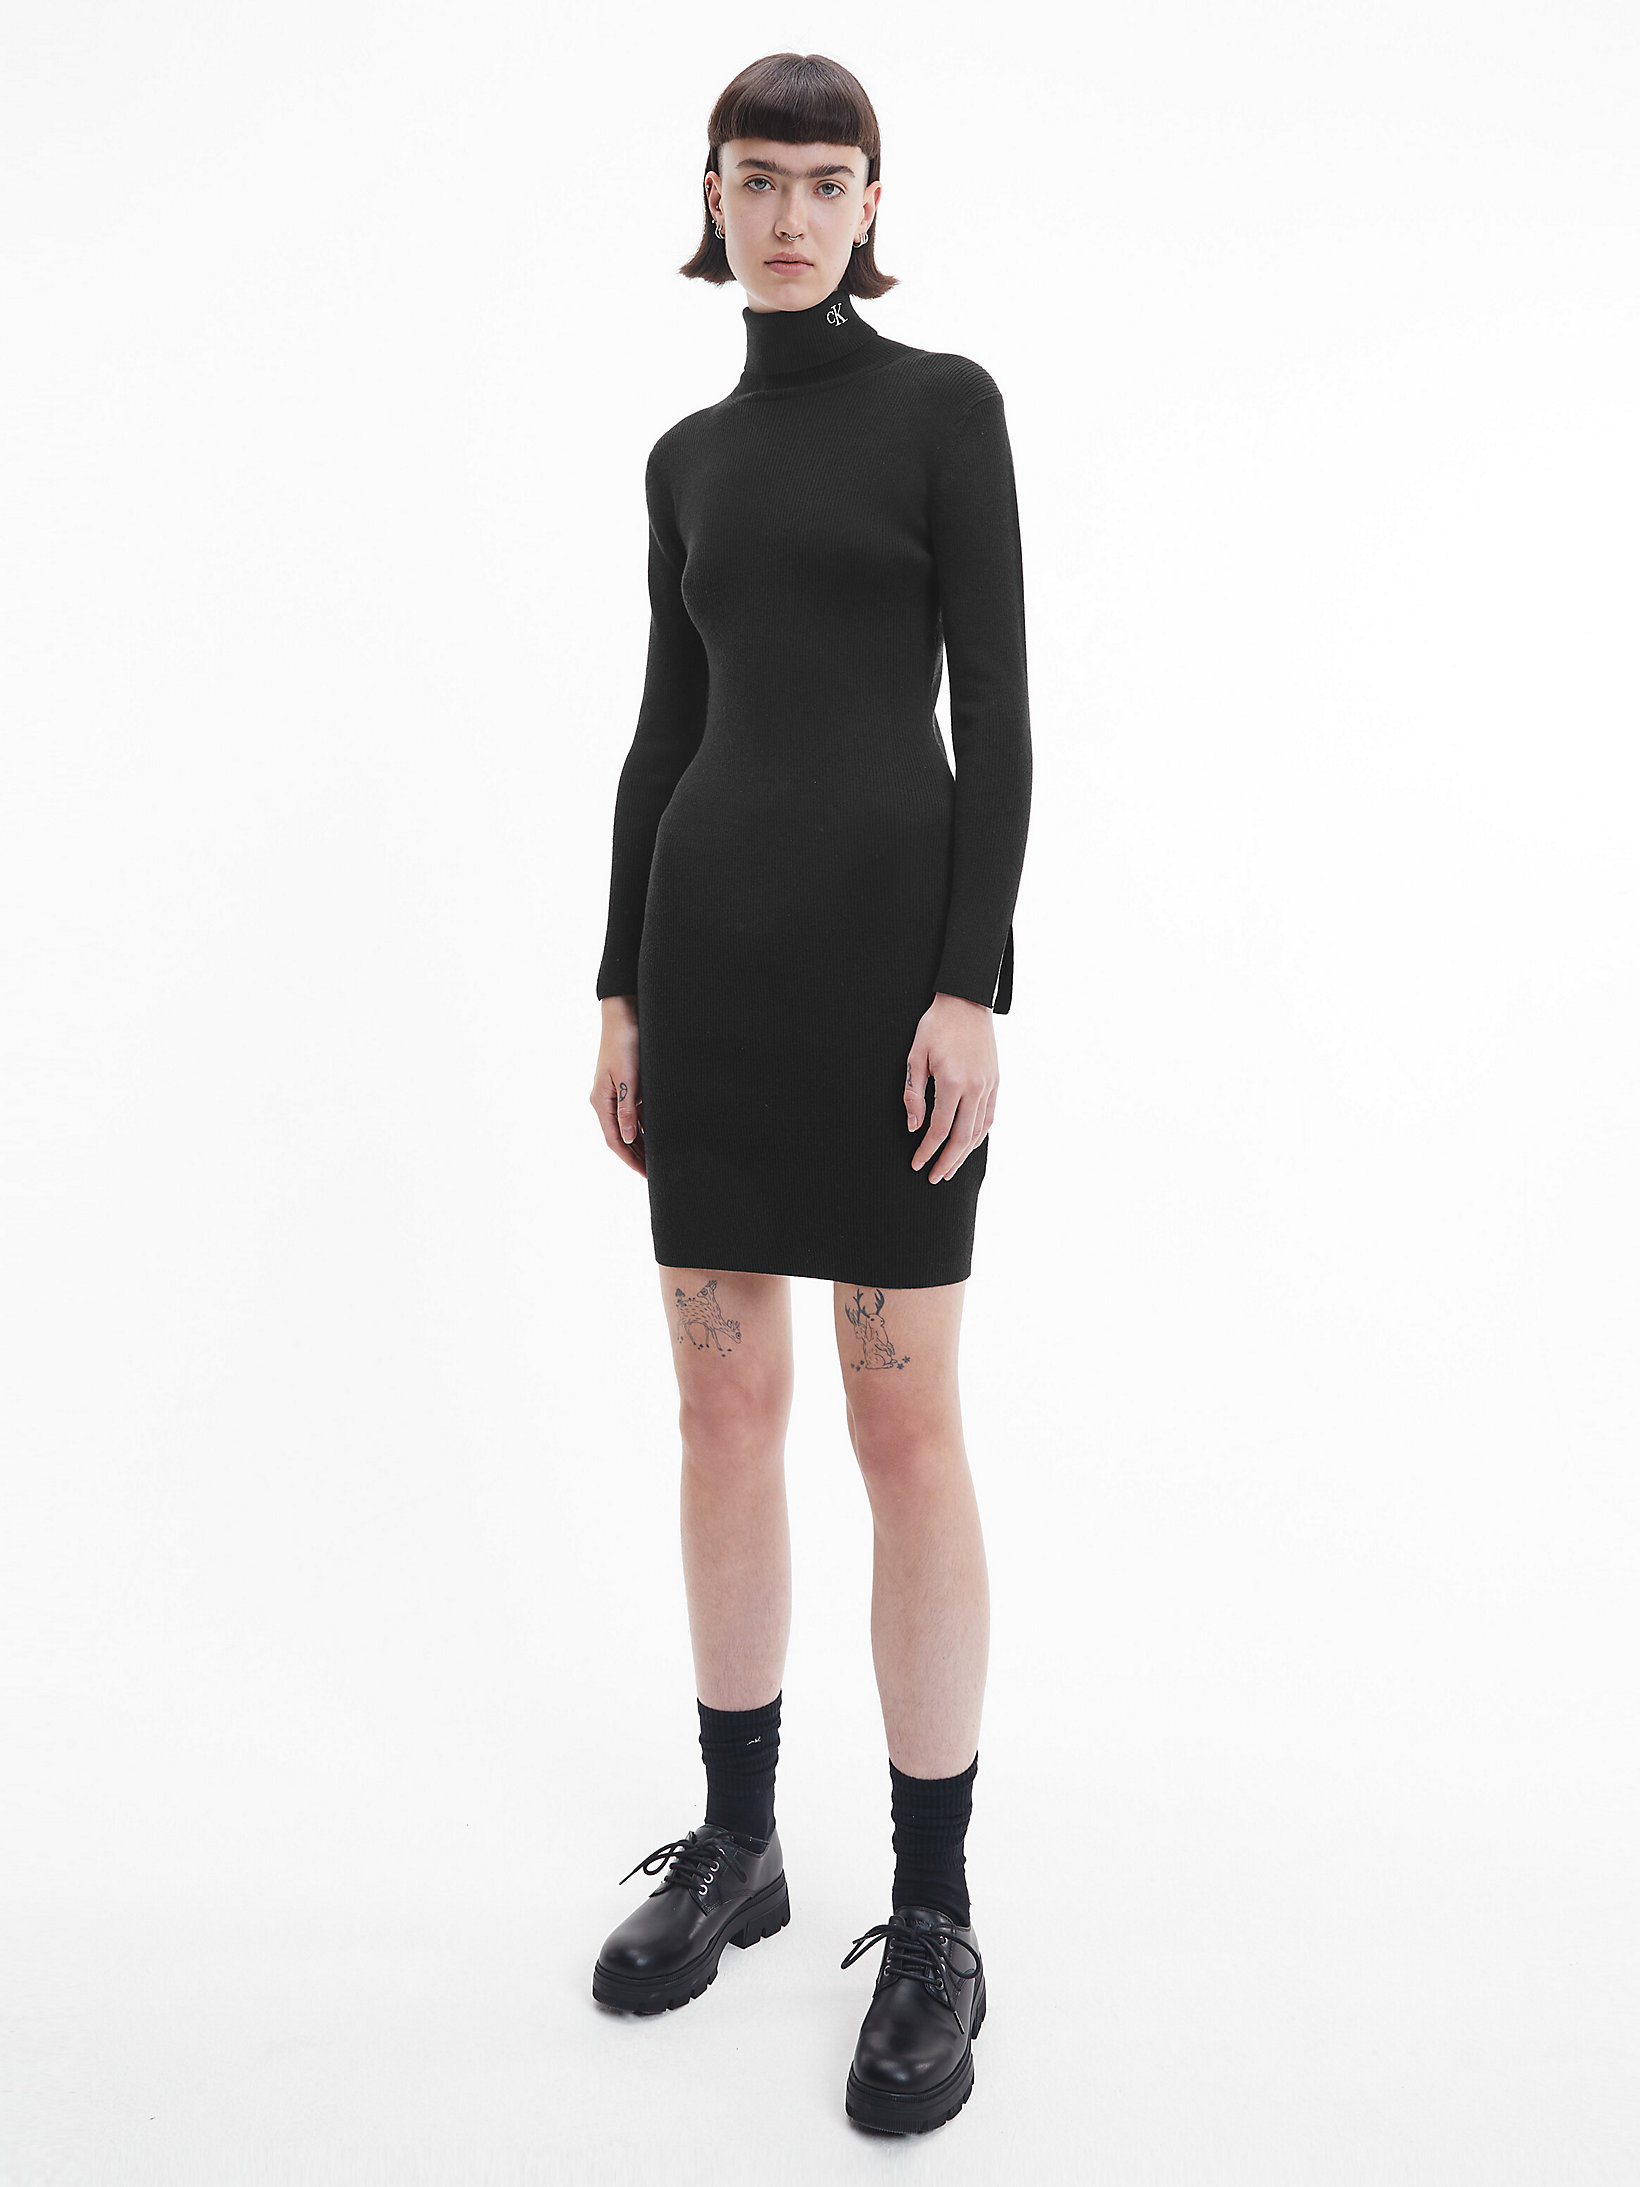 CK Black Roll Neck Jumper Dress undefined women Calvin Klein